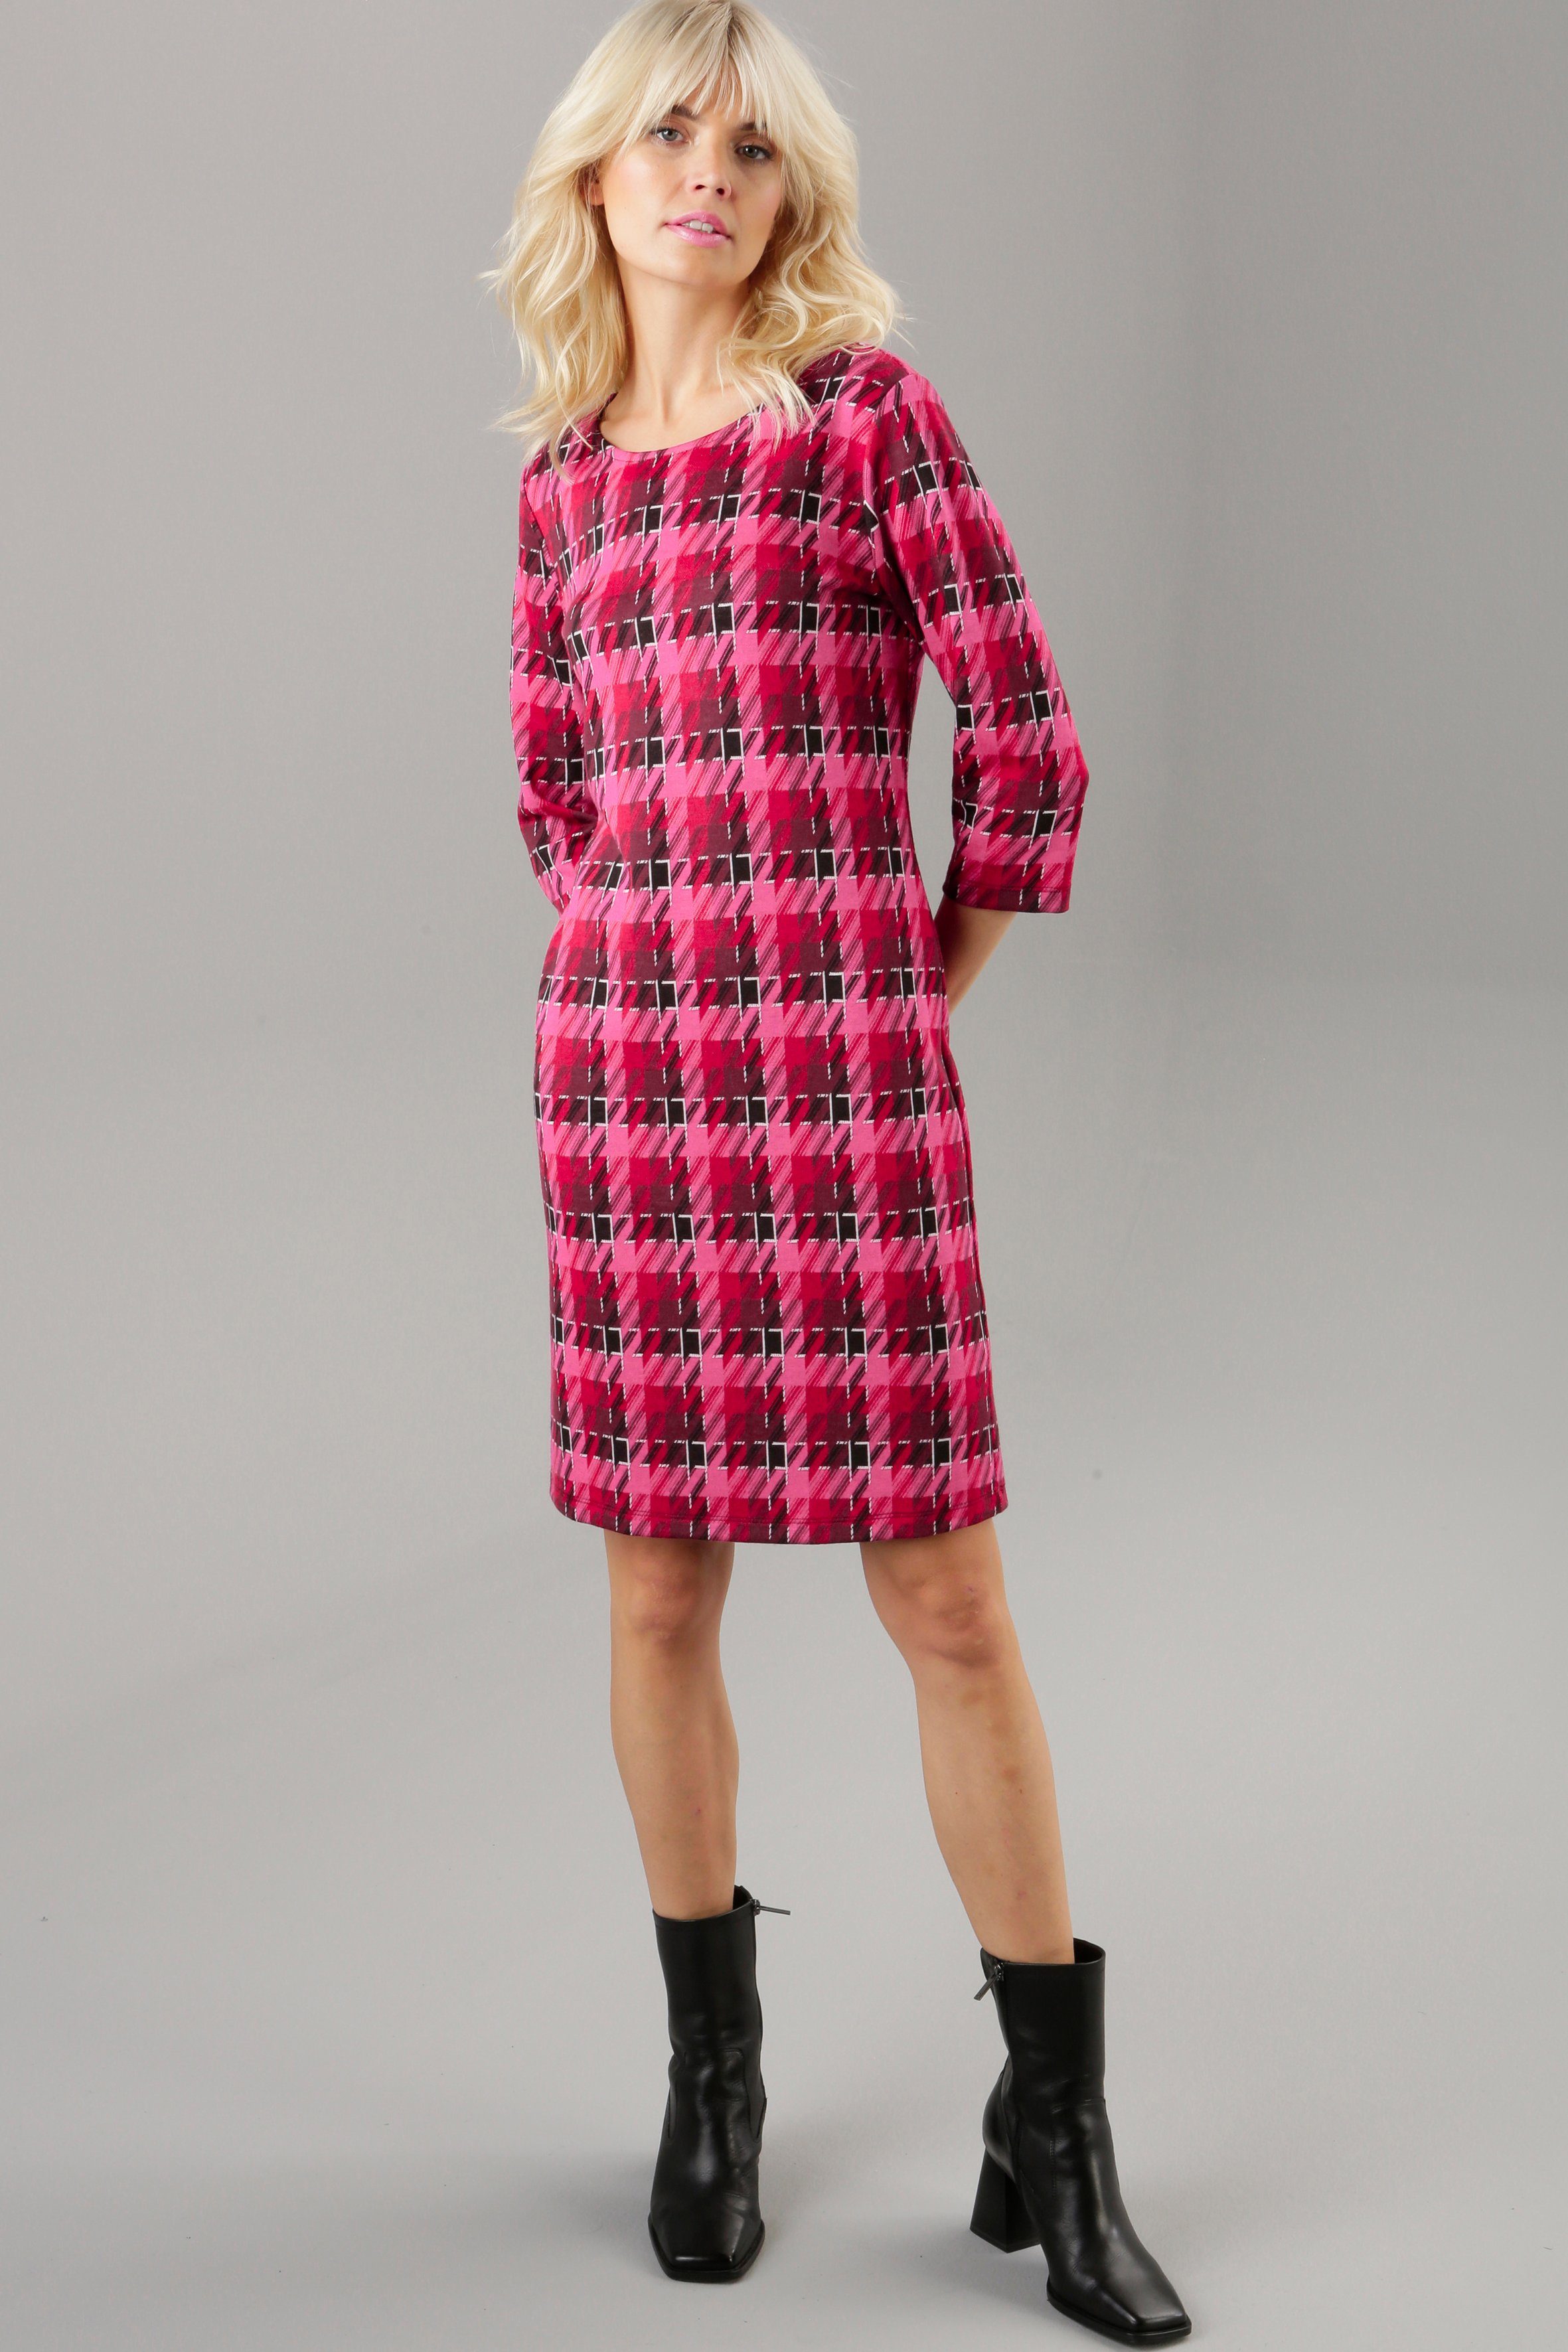 Aniston SELECTED Jerseykleid mit trendy Allover-Muster Knallfarben in